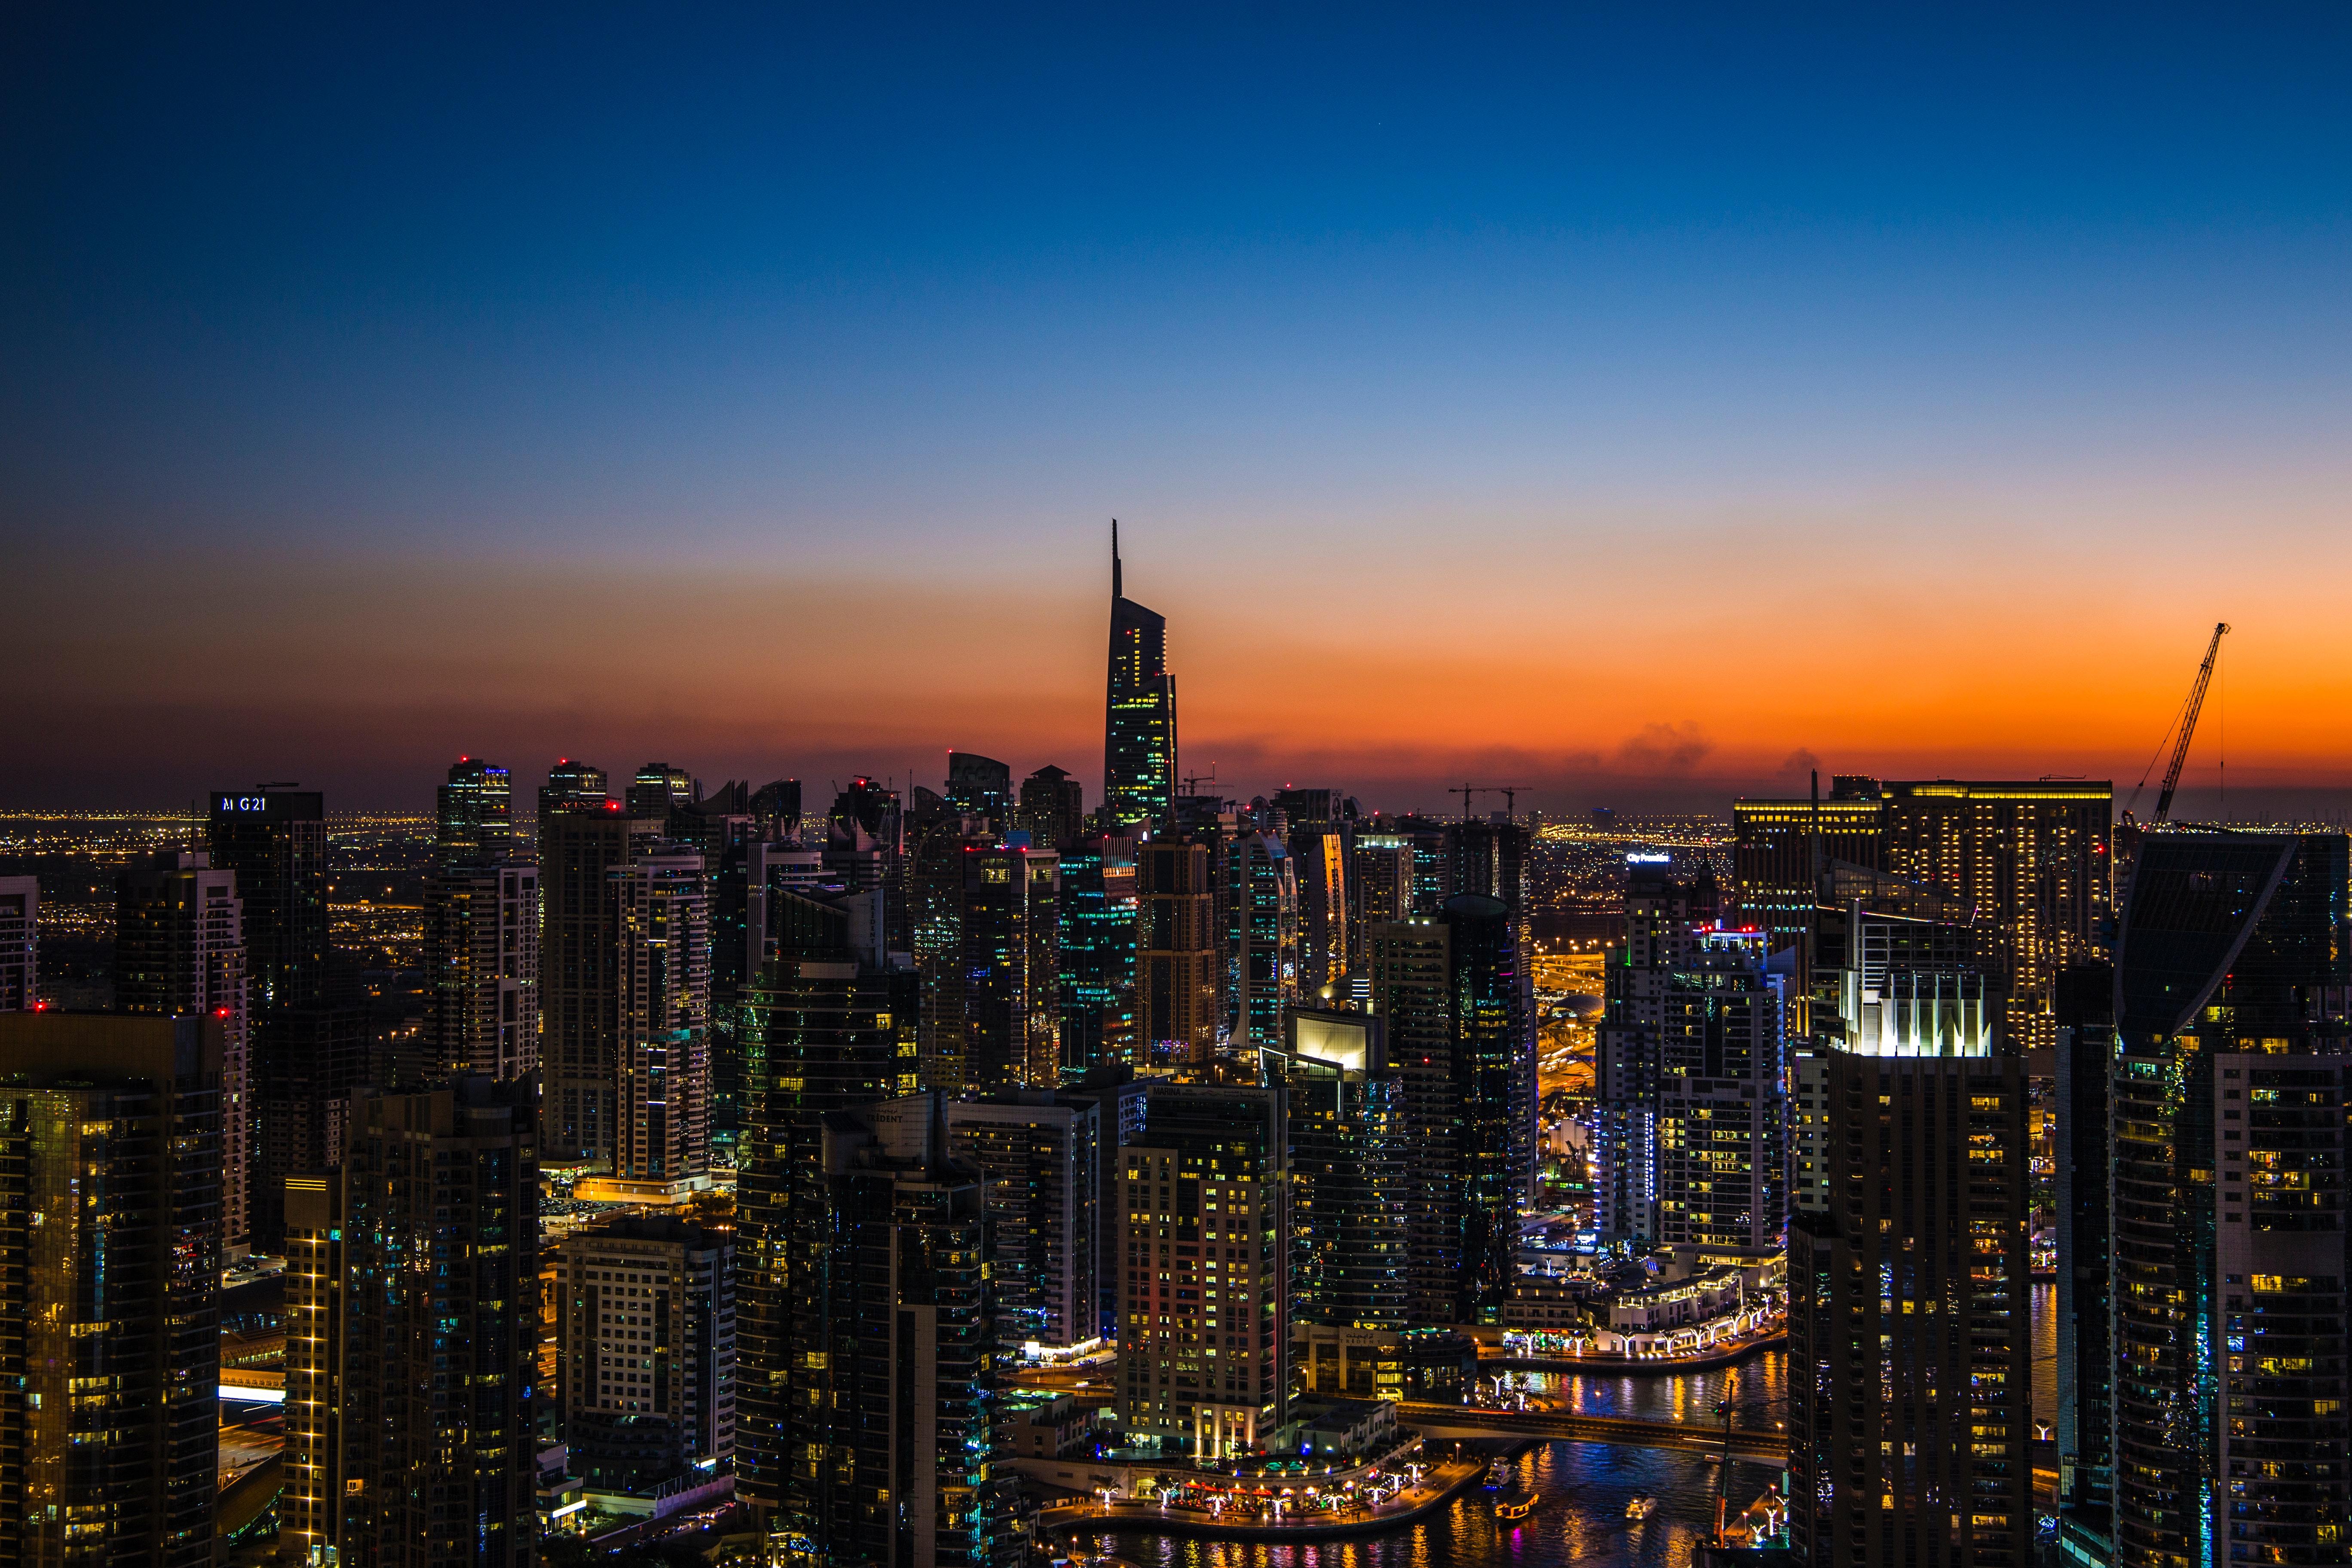 Night City, Skyscrapers, Sunset, Aerial View, City - Beautiful Buildings At Night - HD Wallpaper 